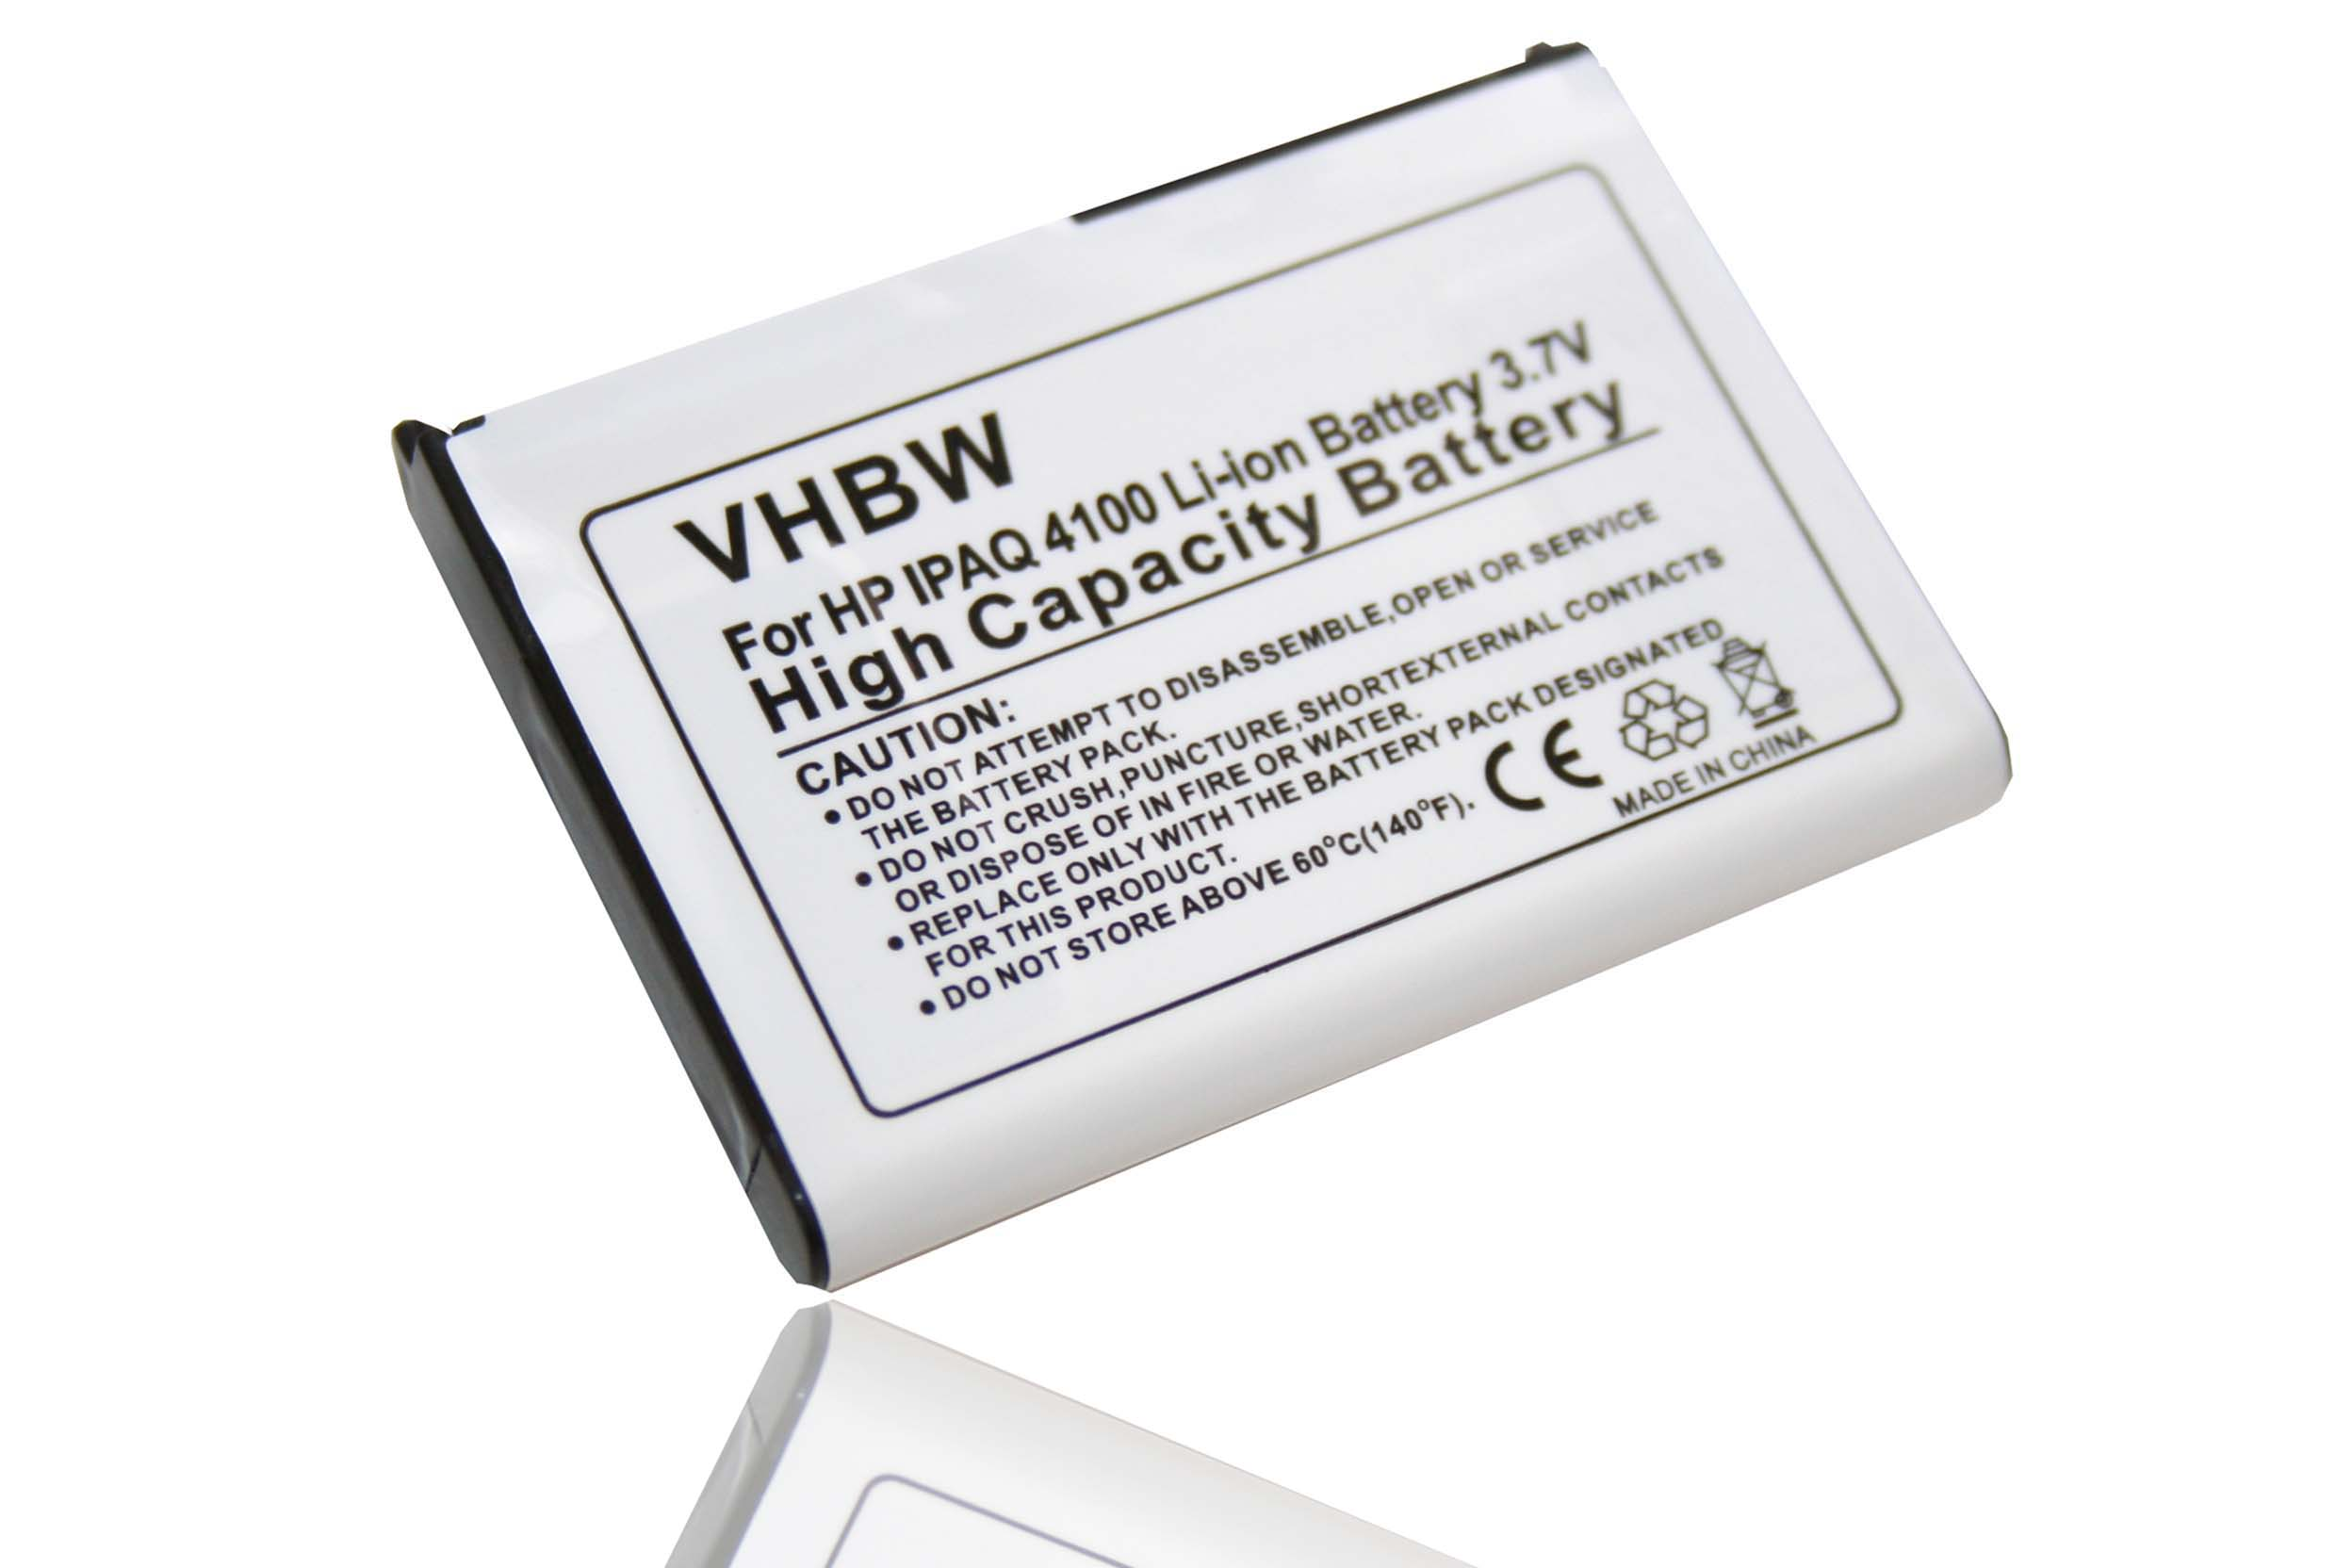 VHBW kompatibel mit Pocket Volt, Fujitsu-Siemens Akku N500, Handheld, N540, 420, 1000 Loox N520, Li-Ion N560, C550 - 3.7 410